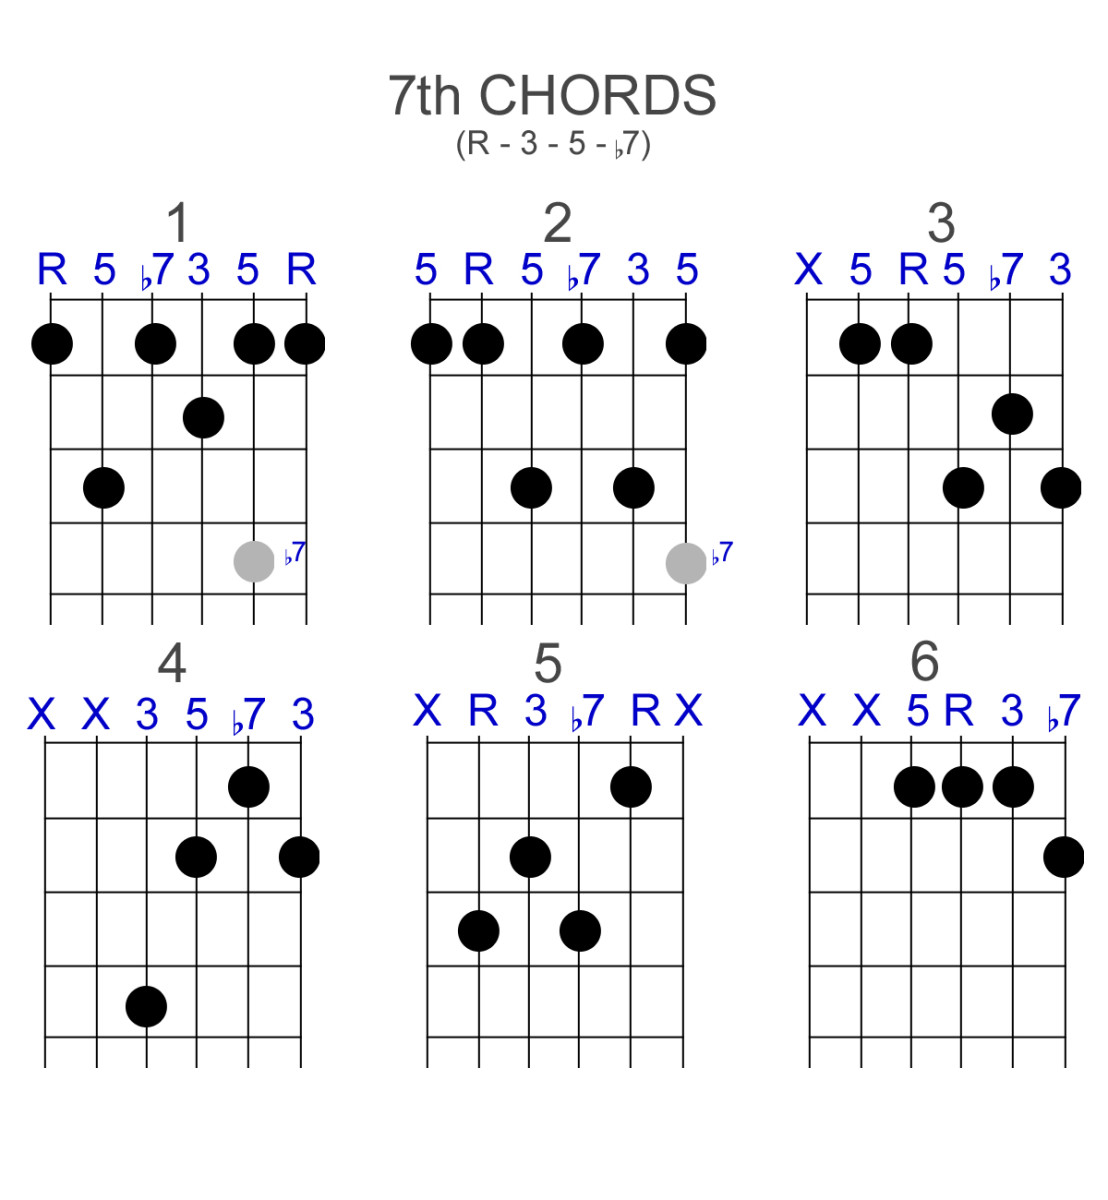 guitar-chords-and-chord-tones-charts